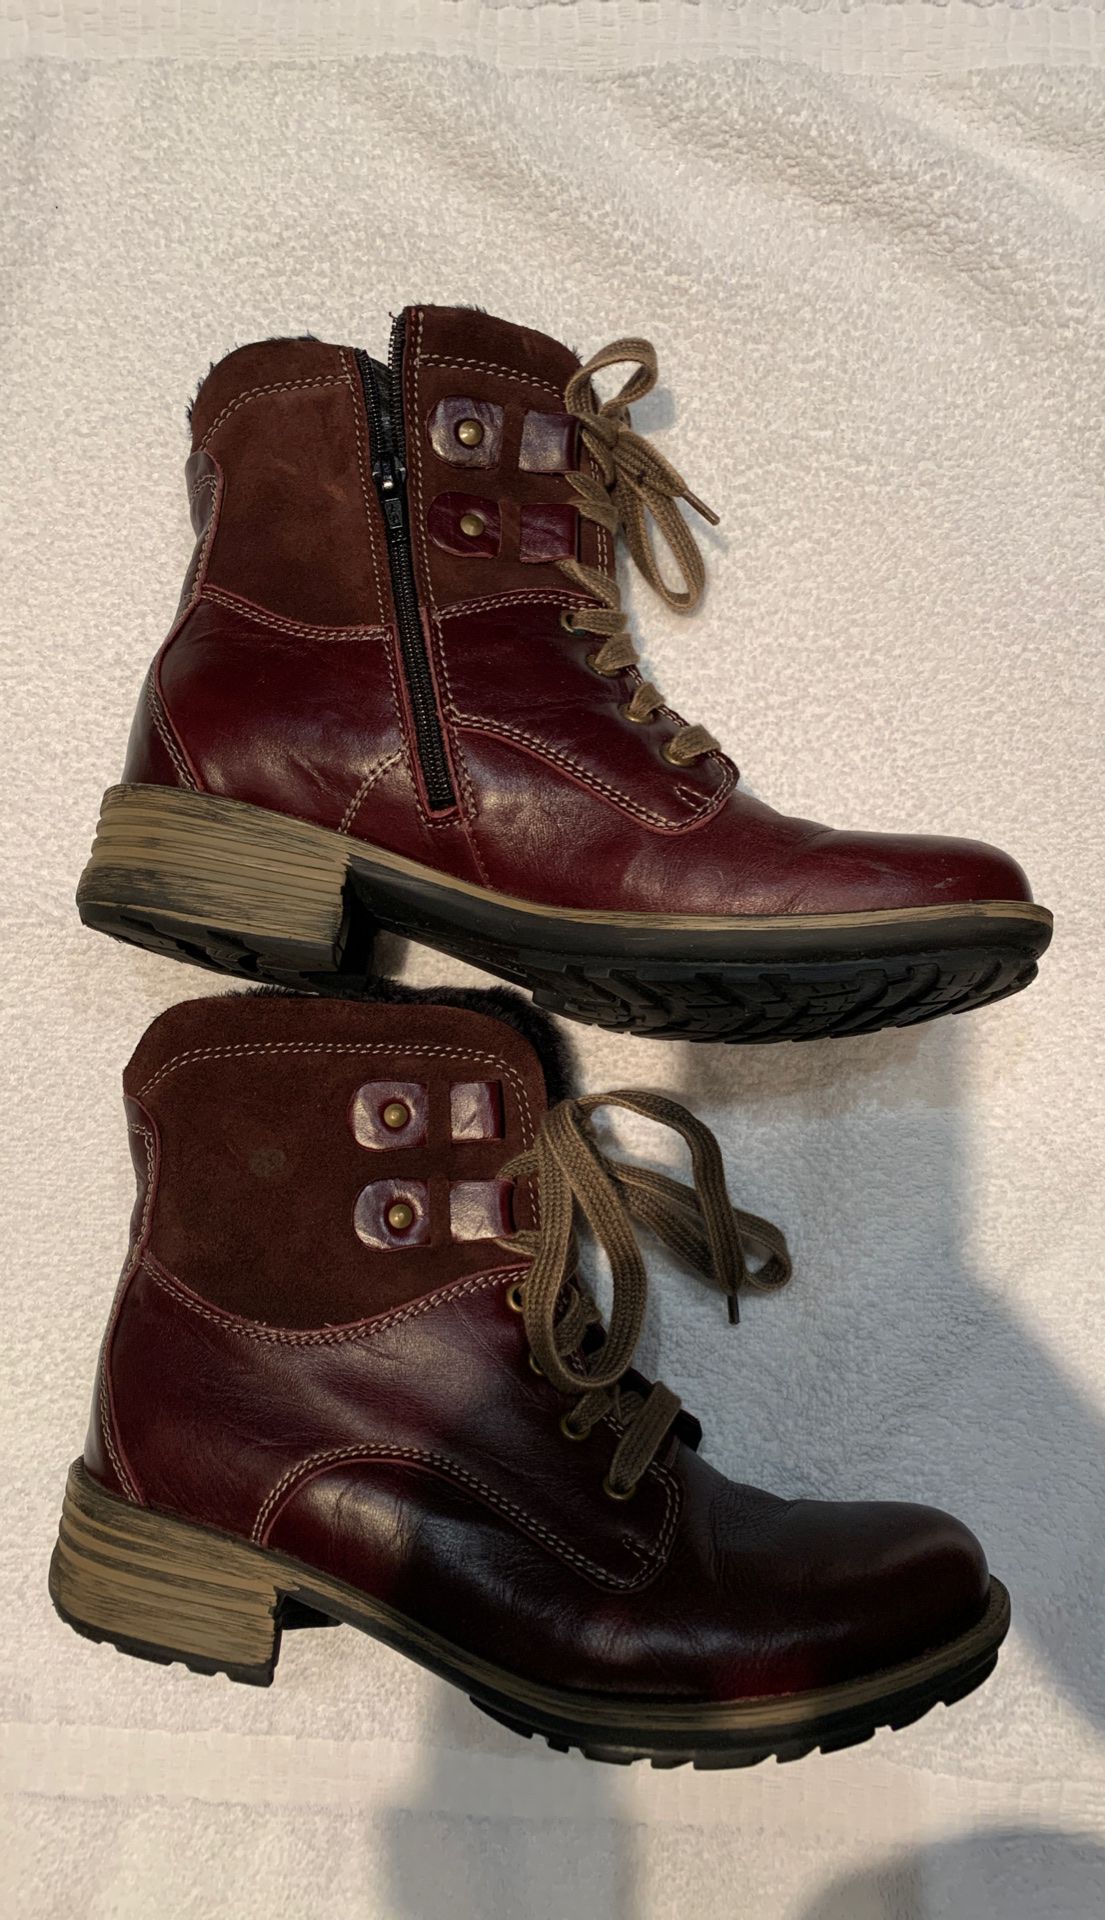 Josef Seibel women’s leather boots with fleece lining